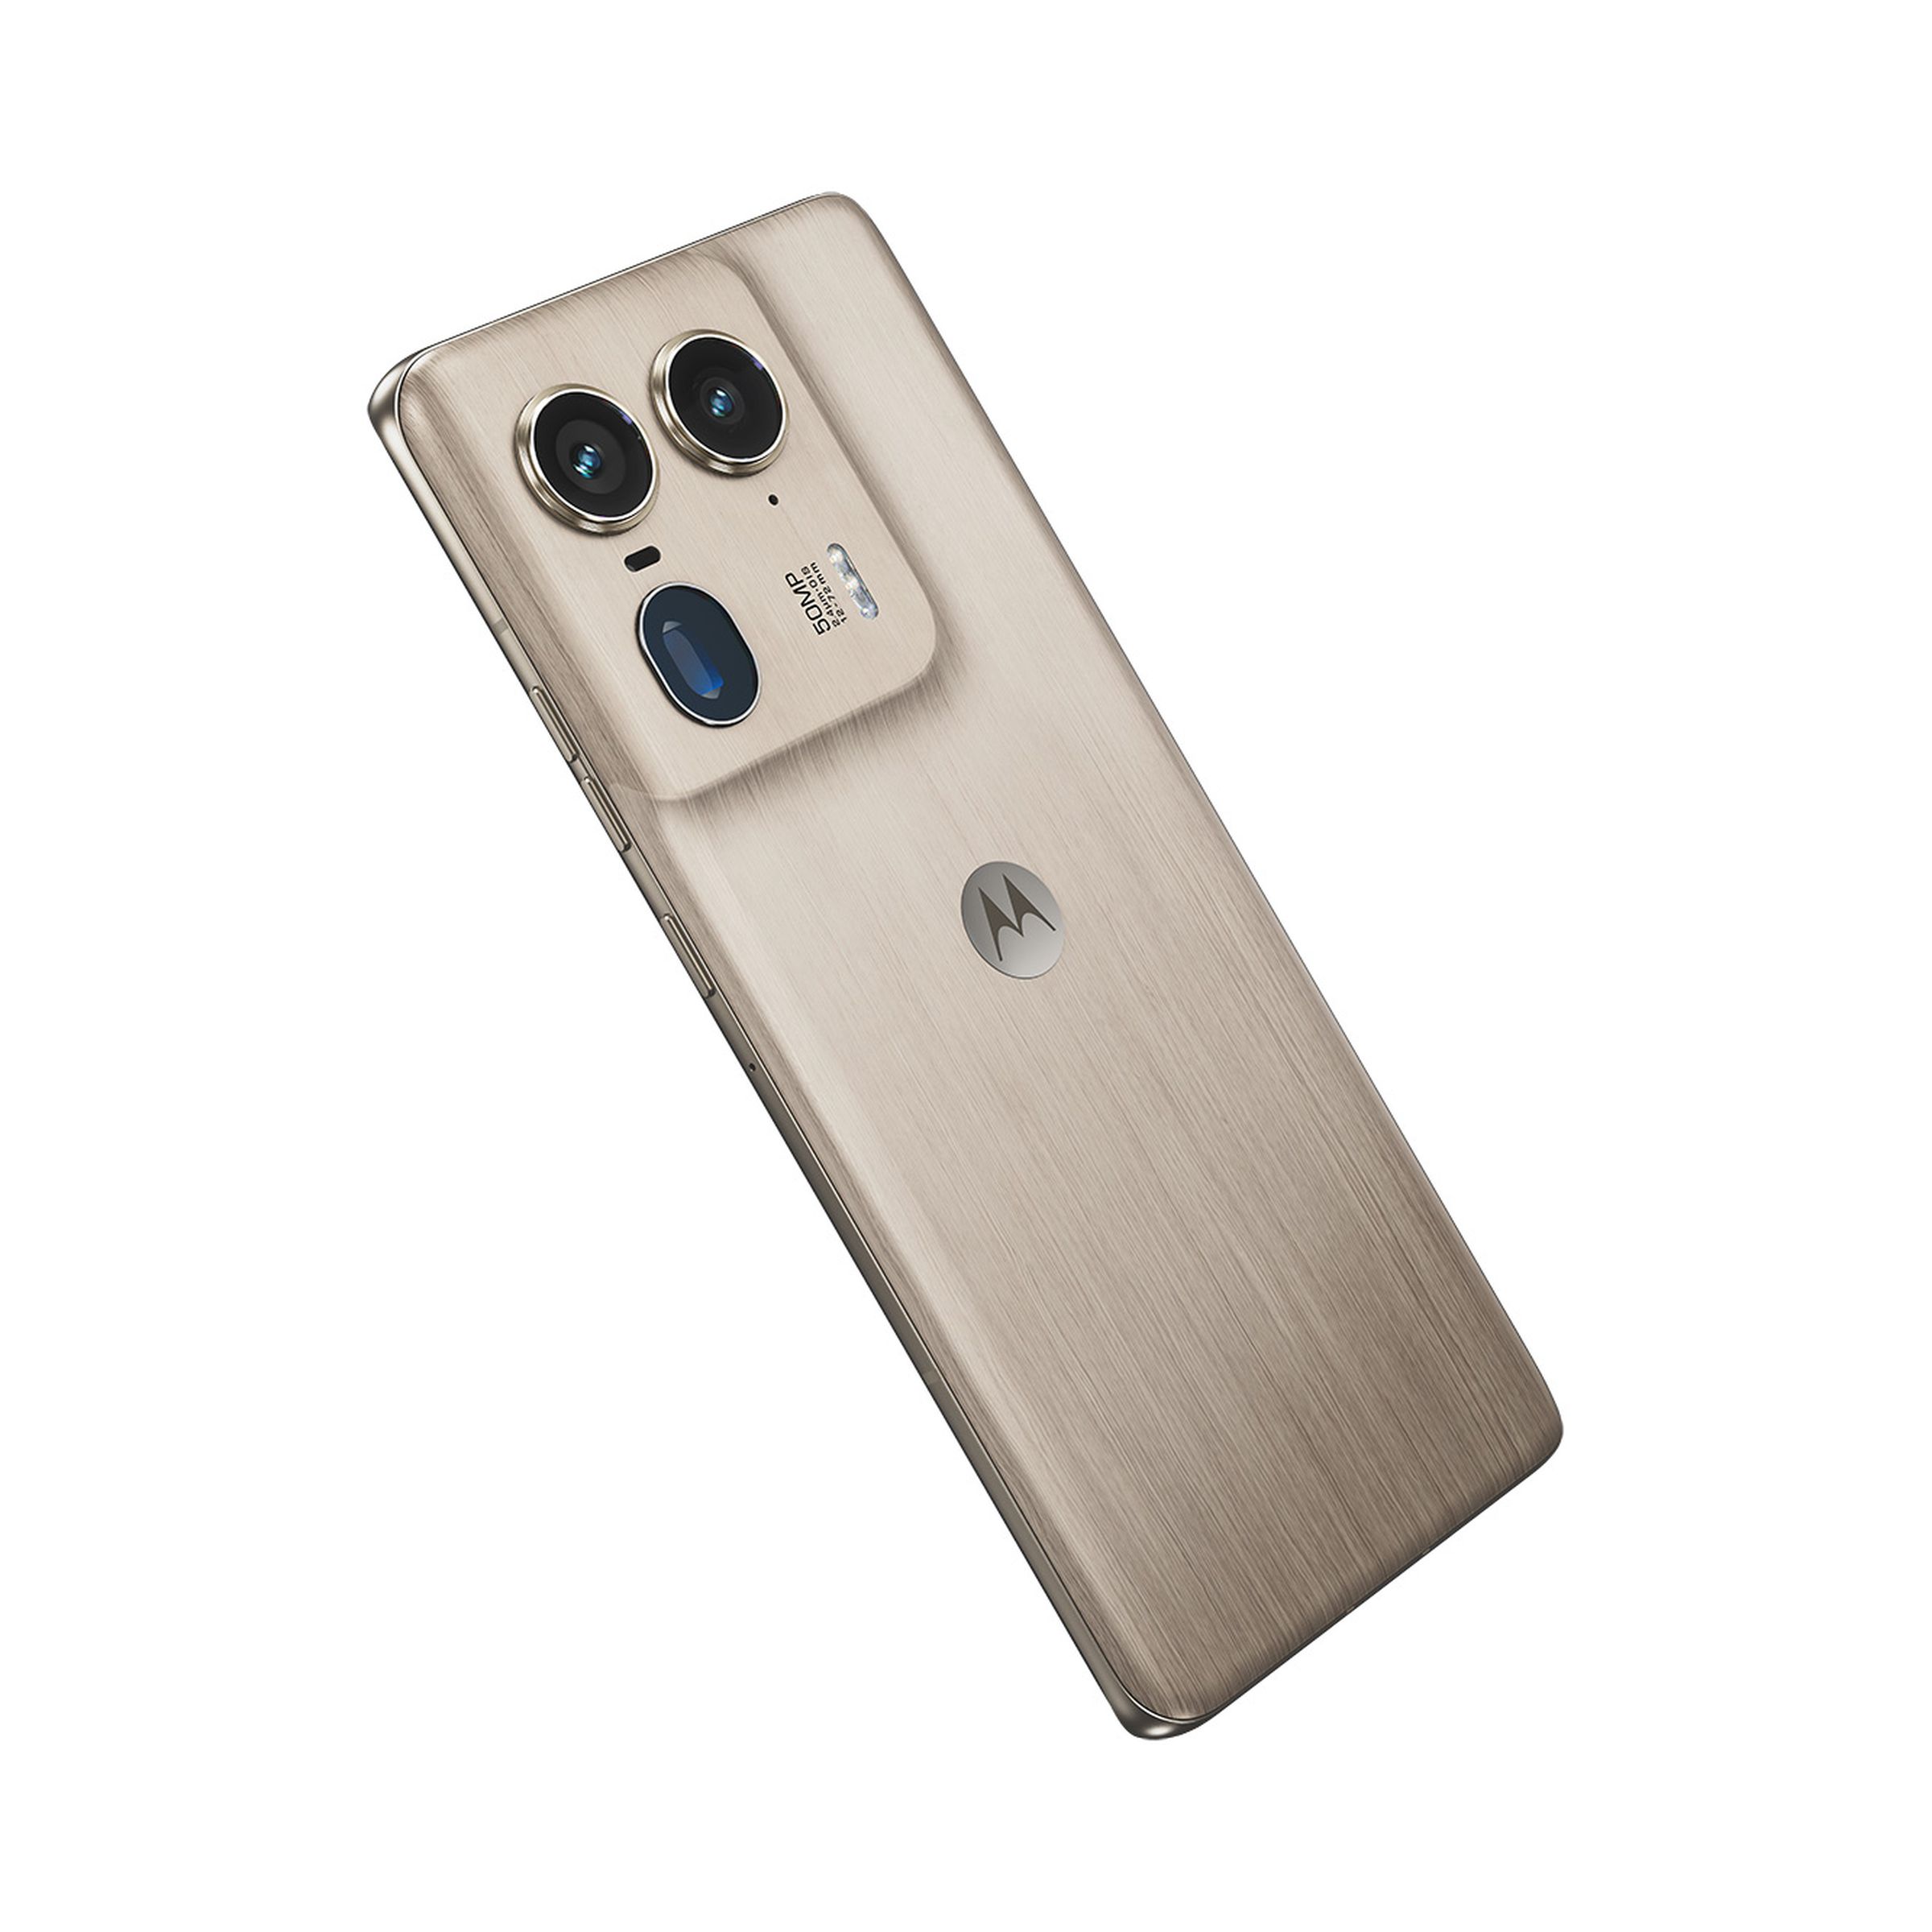 Nordic wood Motorola phone rendering showing back panel.